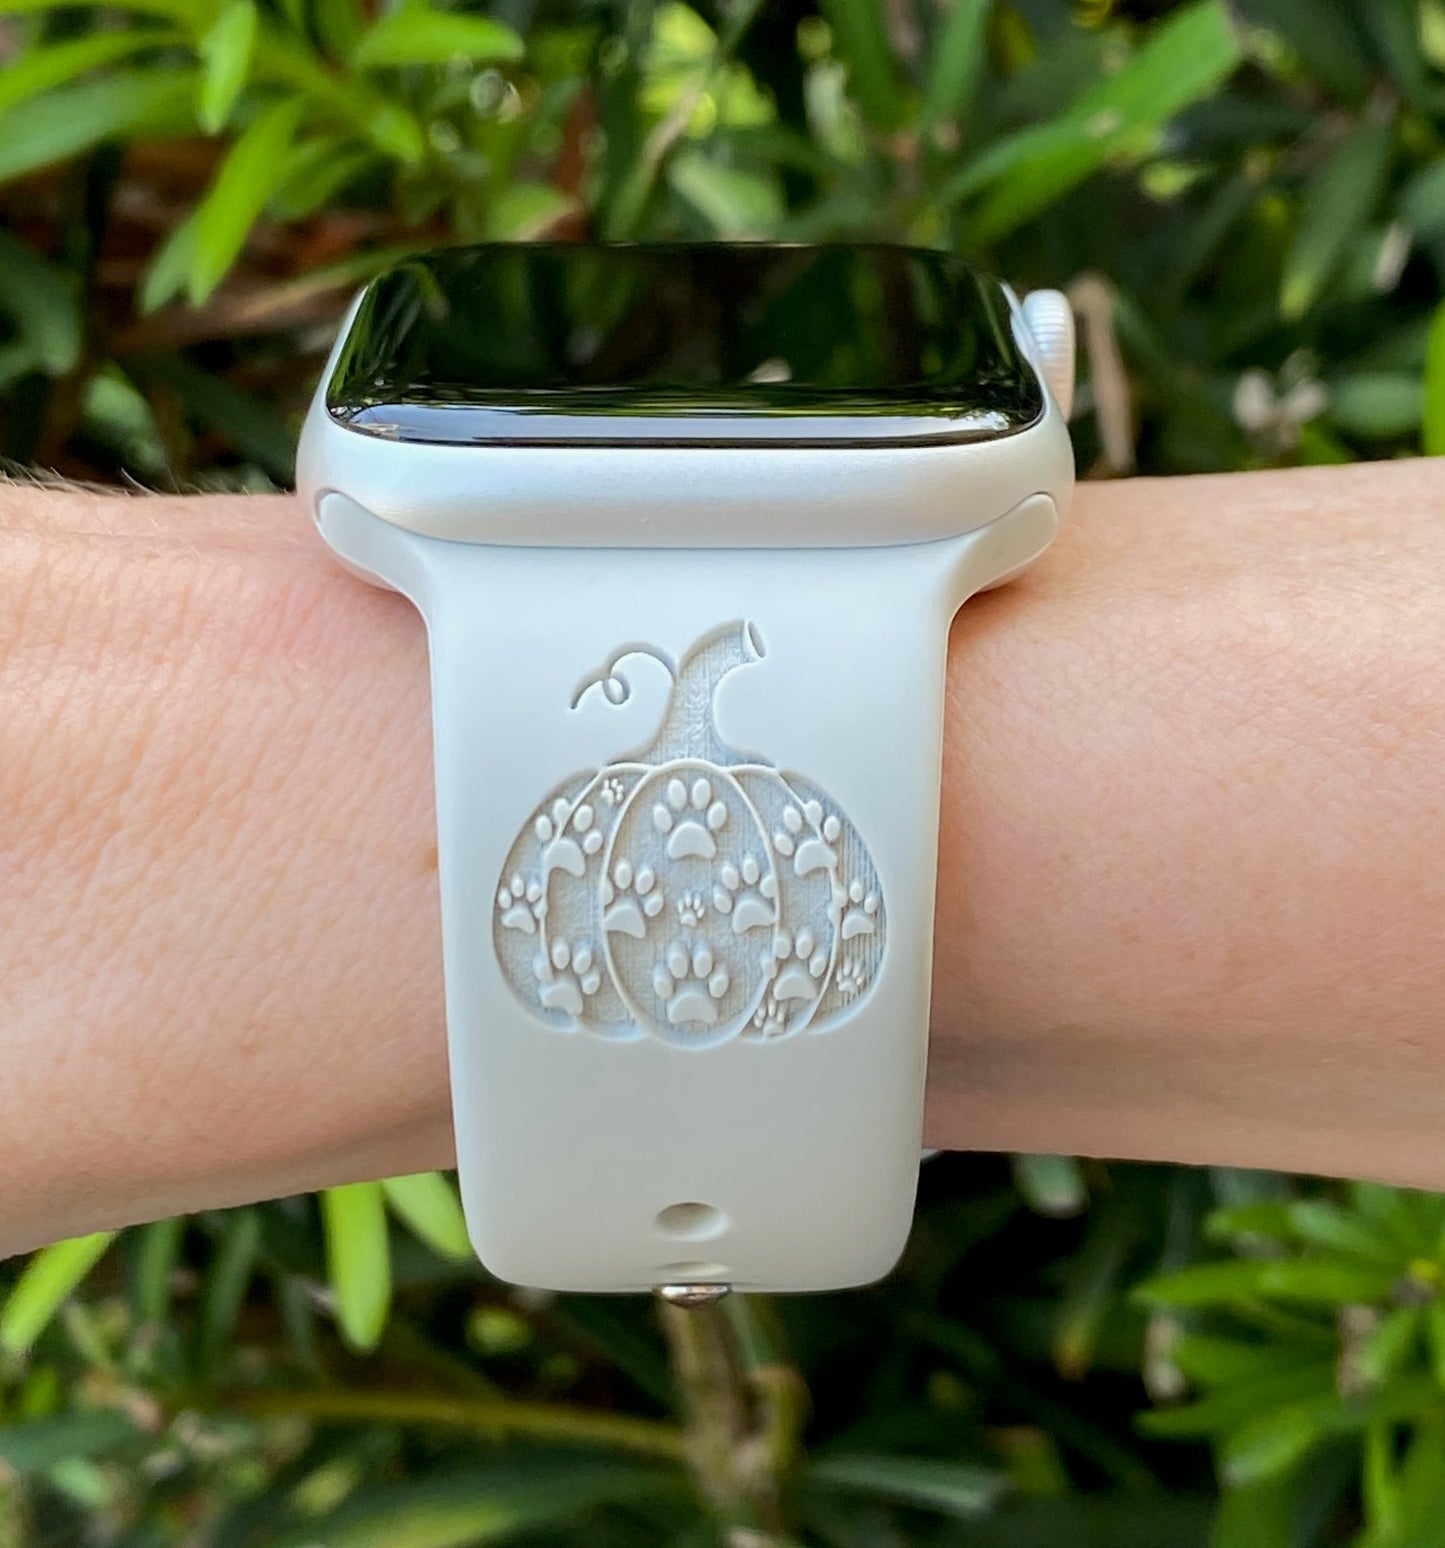 Pumpkin Dog Paws Apple Watch Band